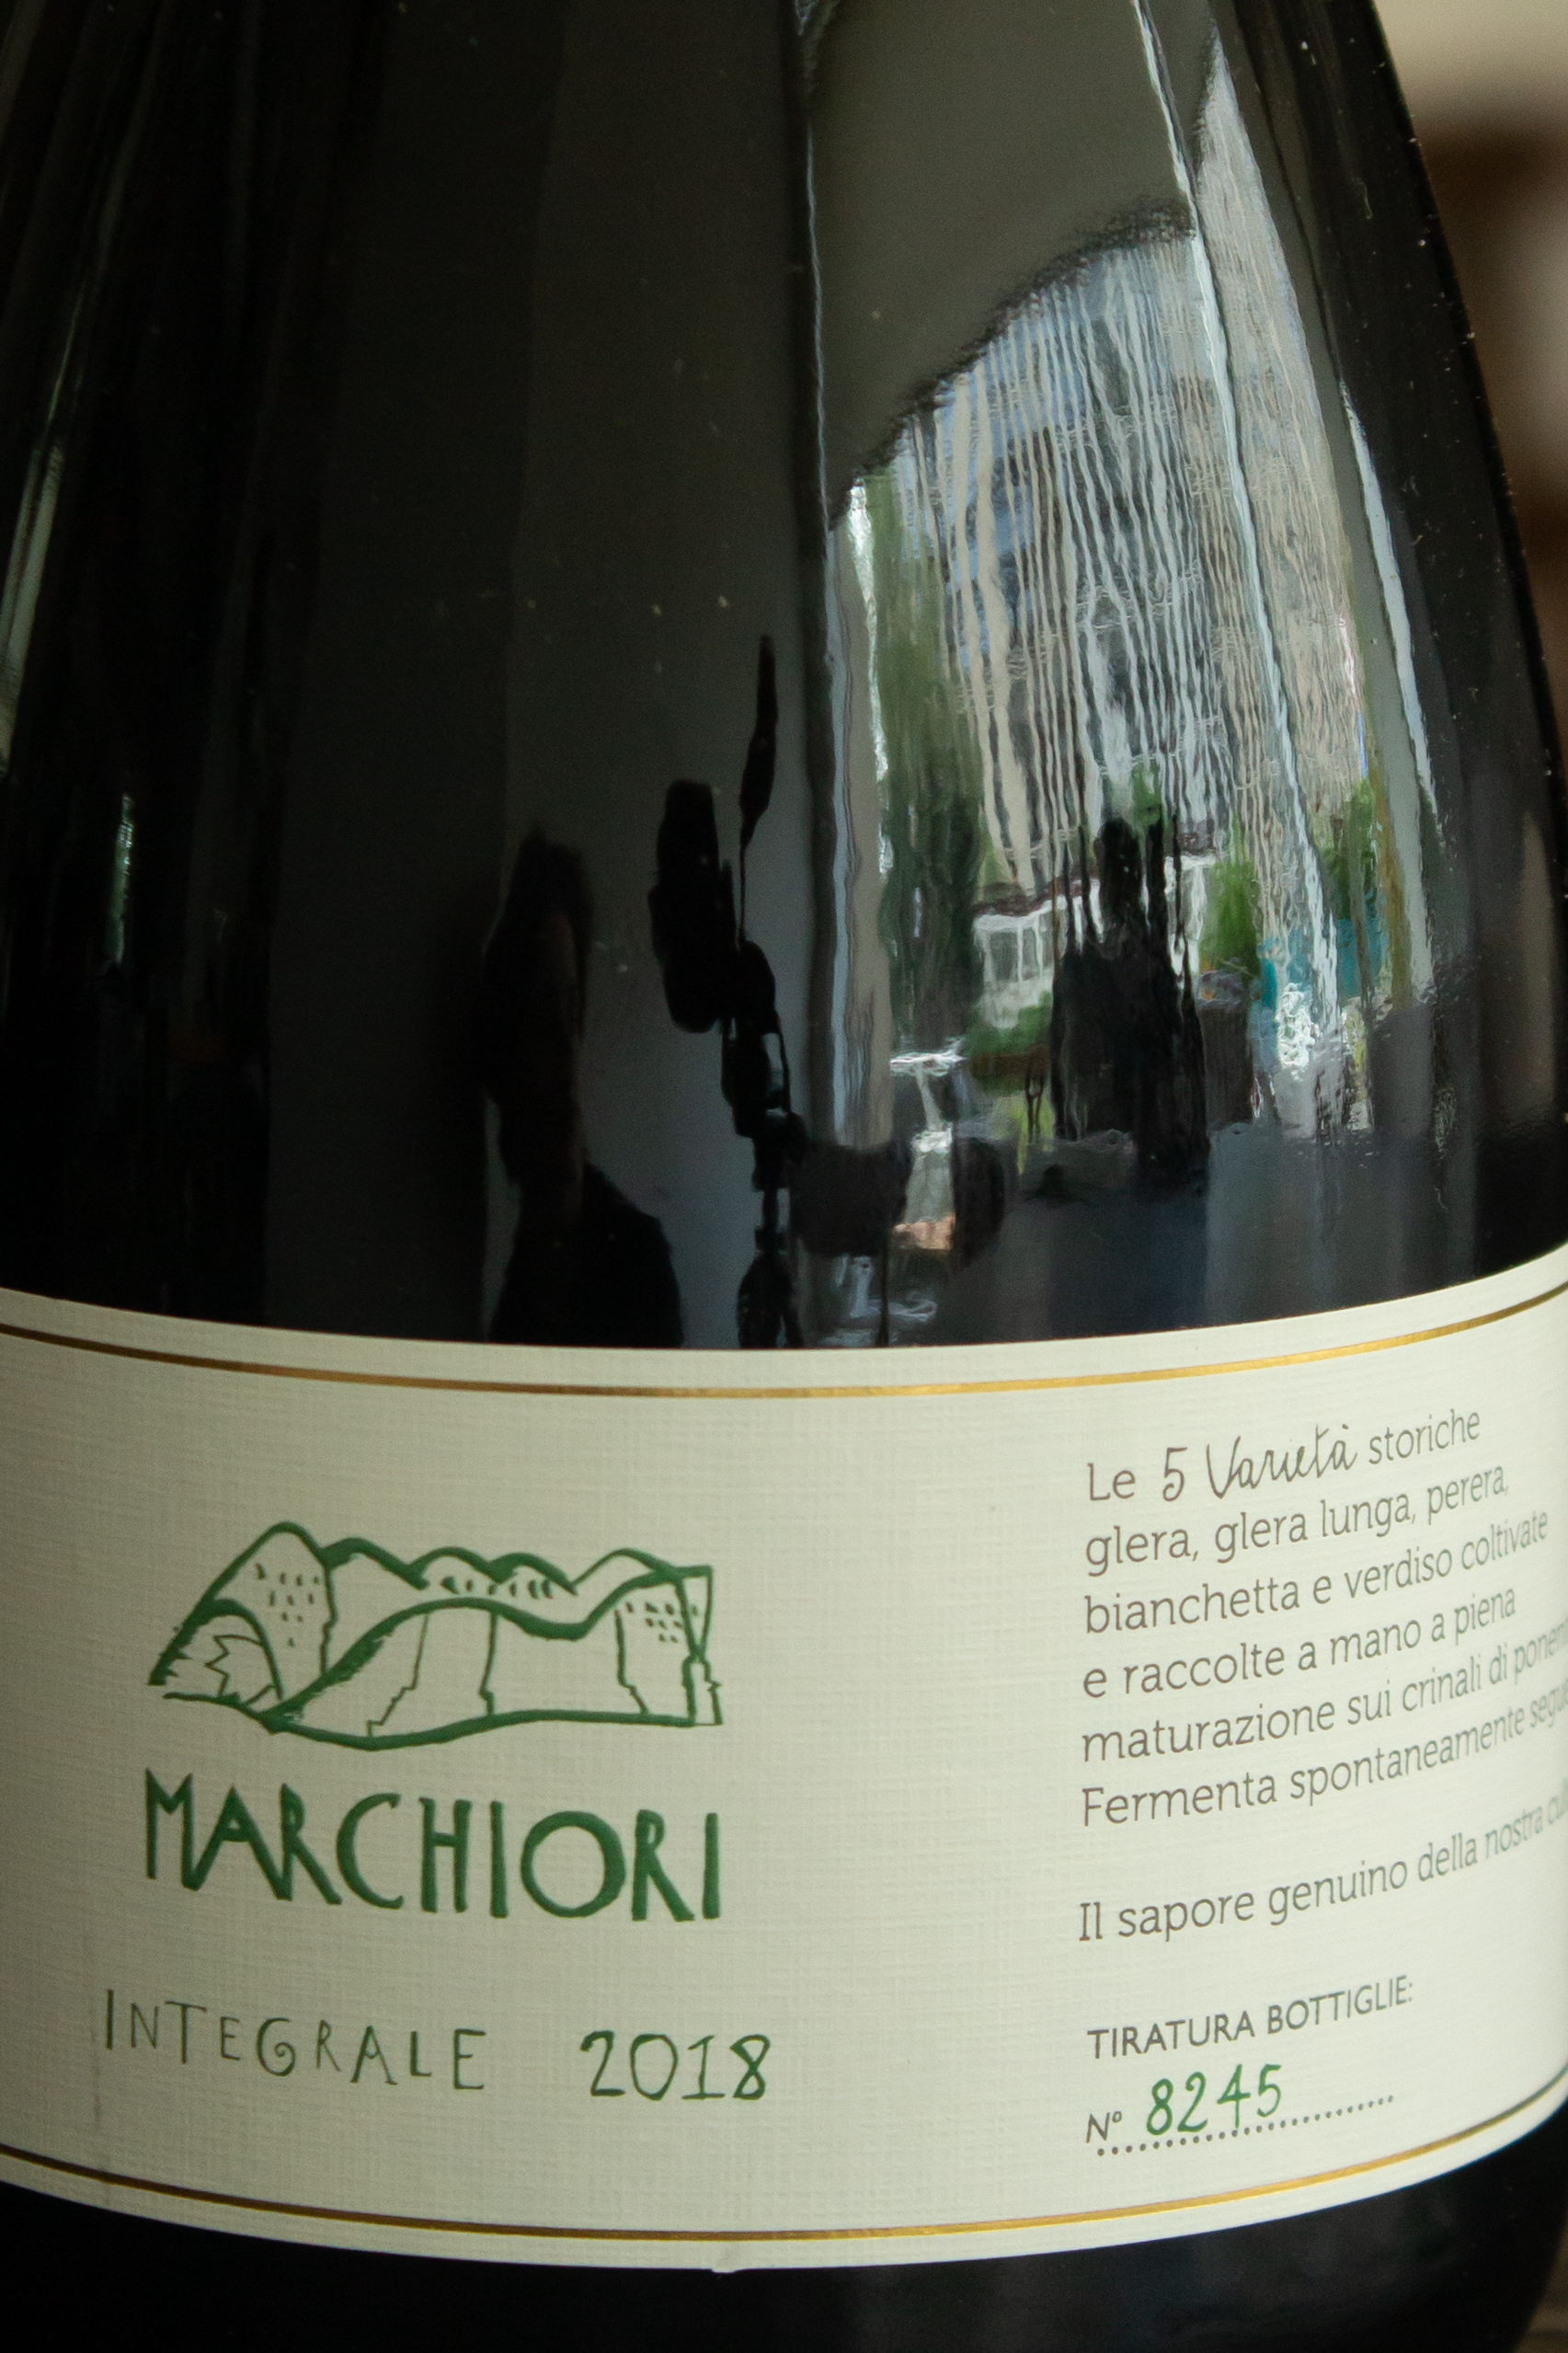 Игристое вино Marchiori Integrale Valdobbiadene Frizzante Rifermentato / Маркьори Интеграле Вальдобьядене Просекко Фридзанте Риферментато